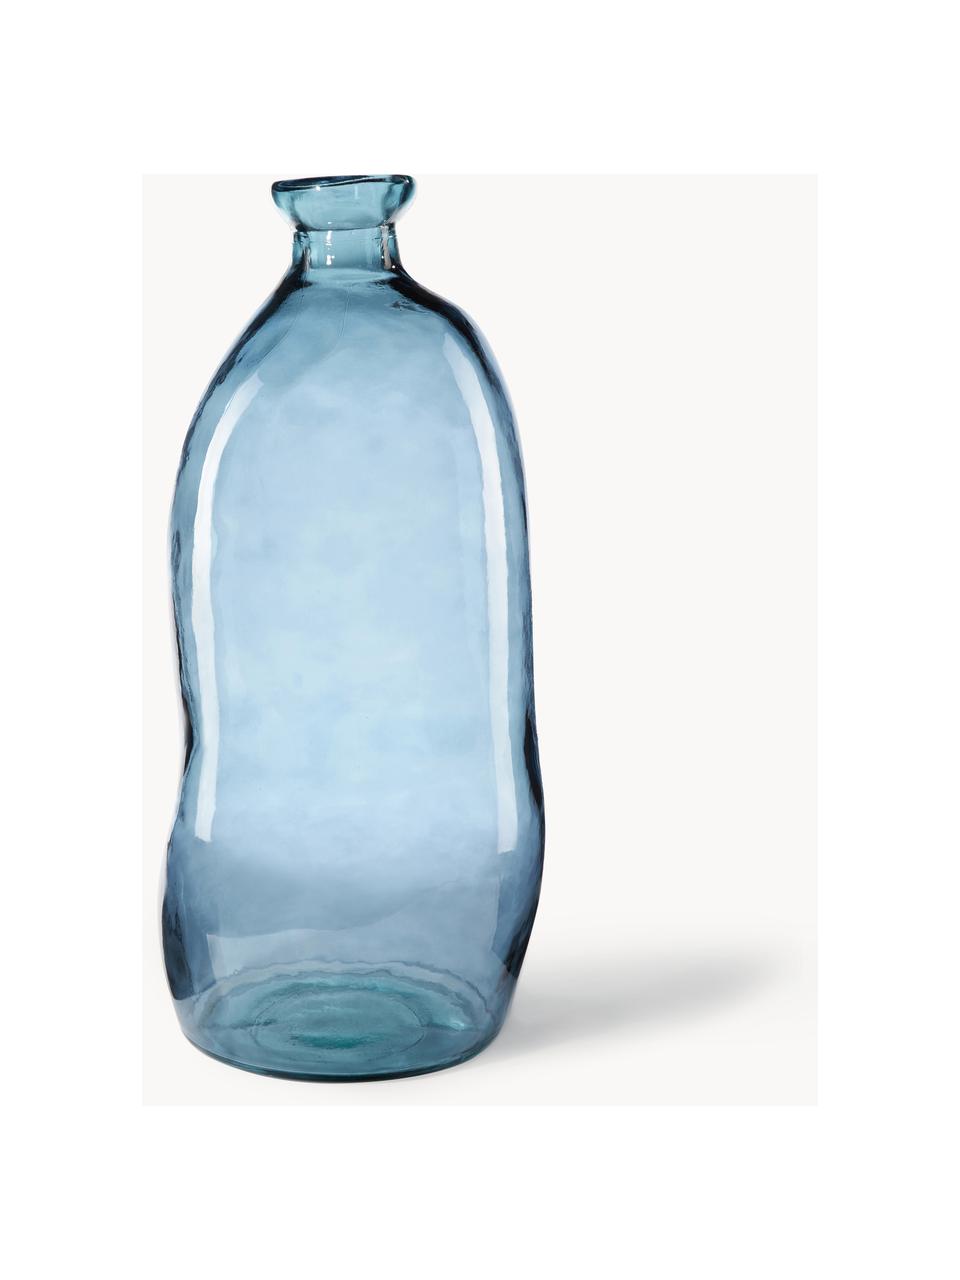 Dame Jeanne Dina, Verre recyclé, certifié GRS, Bleu, Ø 34 x haut. 73 cm